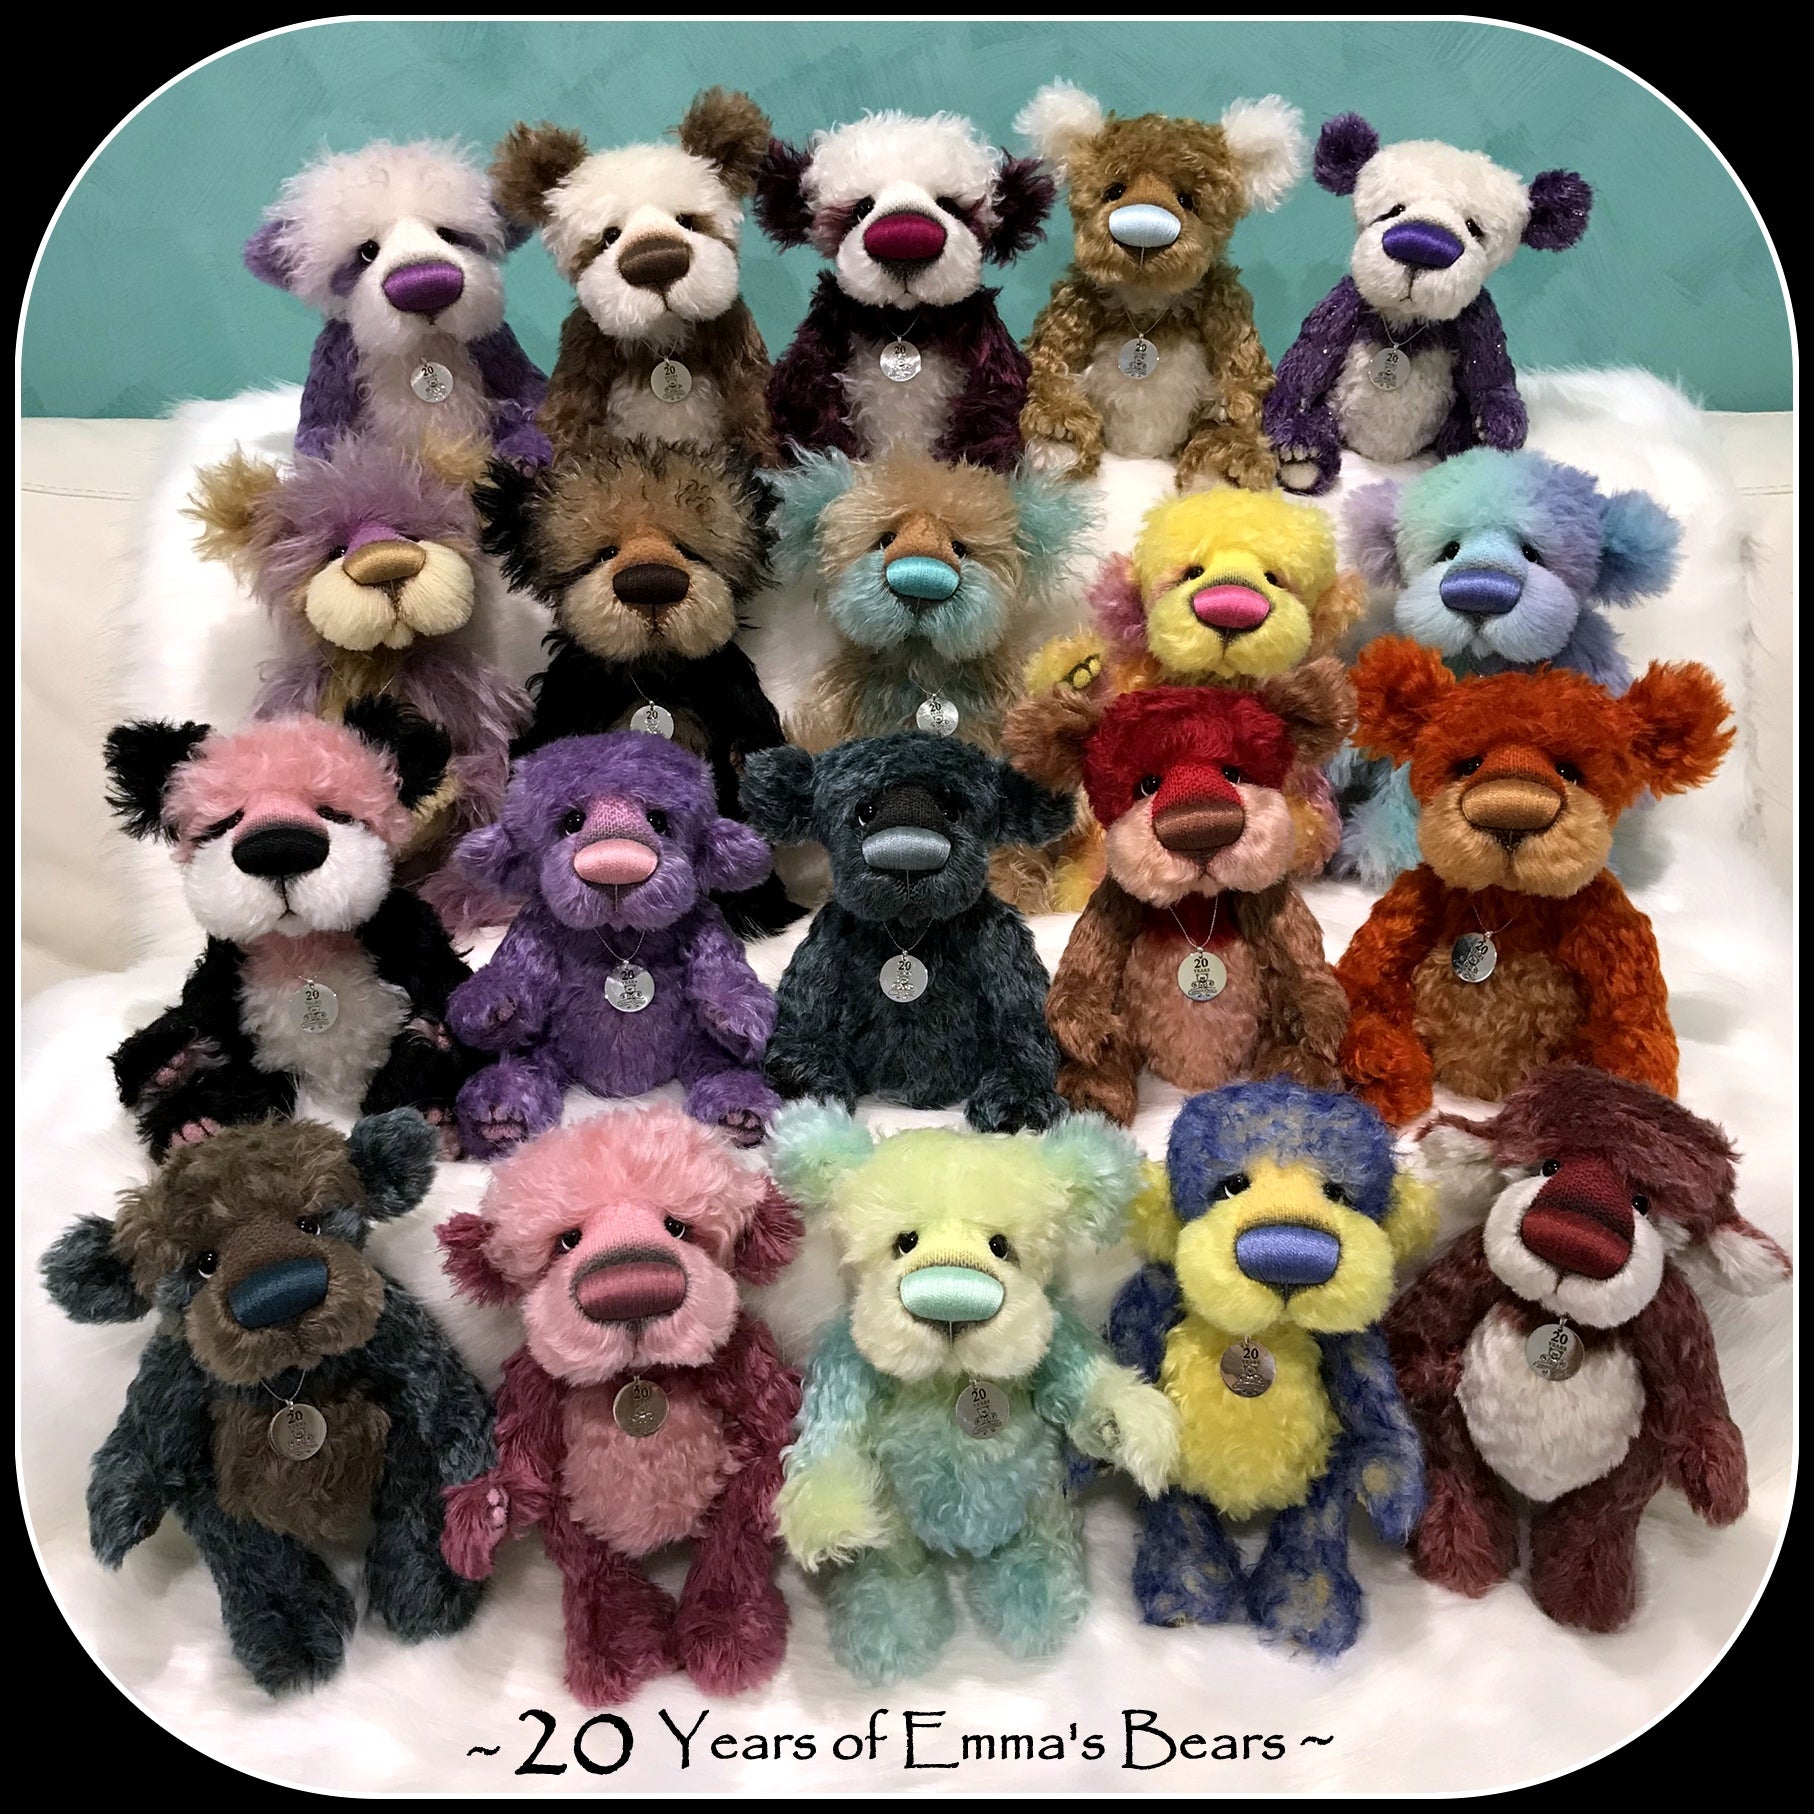 Utopia - 20 Years of Emma's Bears Commemorative Teddy - OOAK in a series